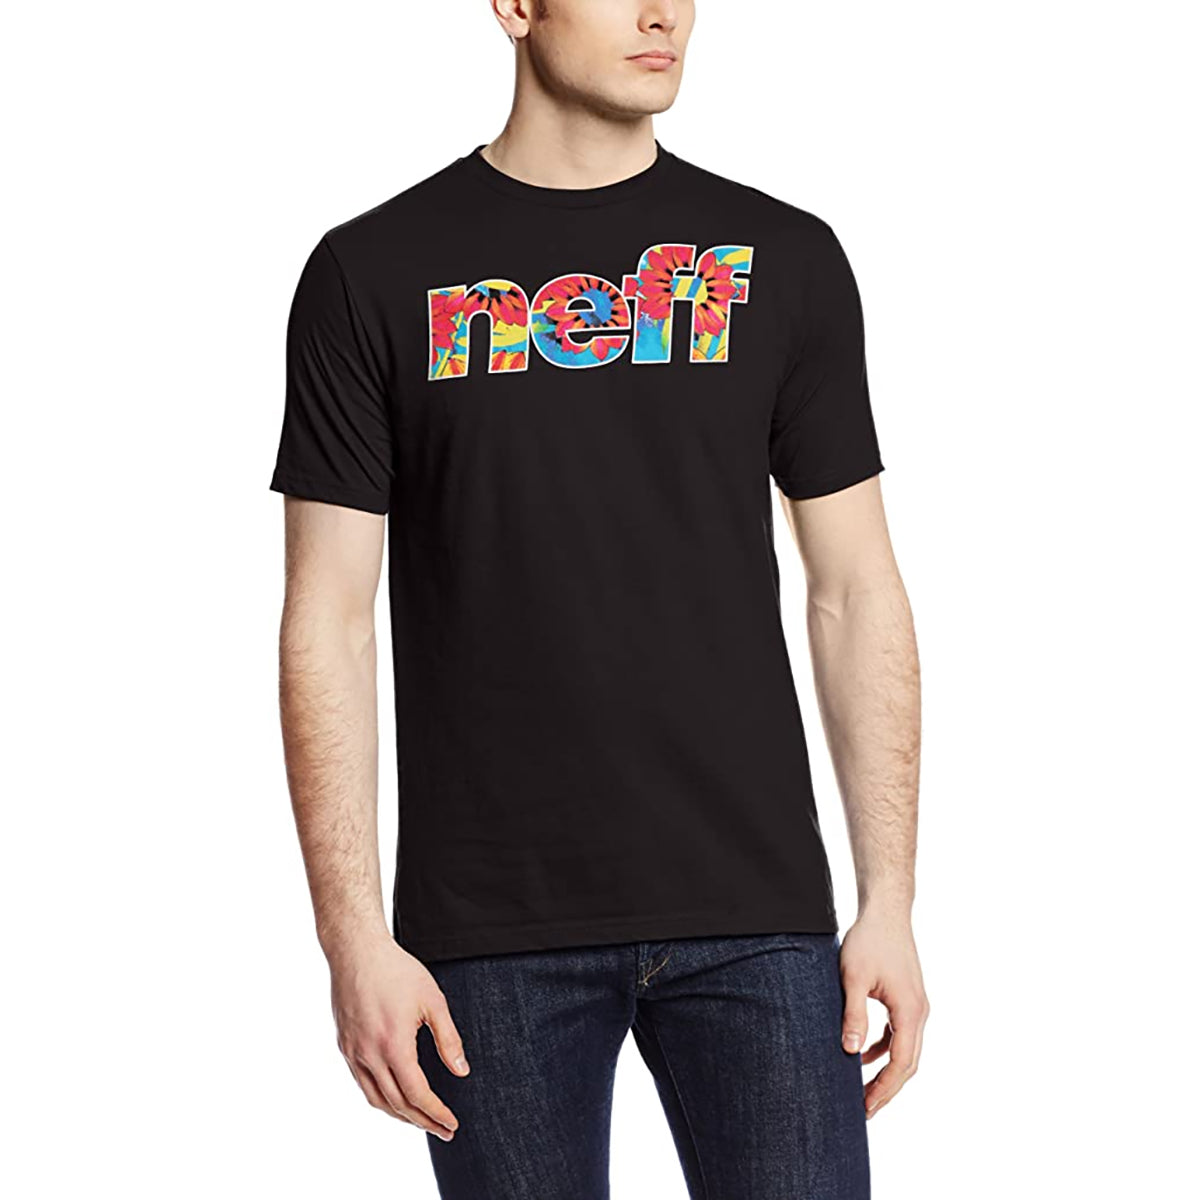 Neff Corpi Filled Men's Short-Sleeve Shirts - Black